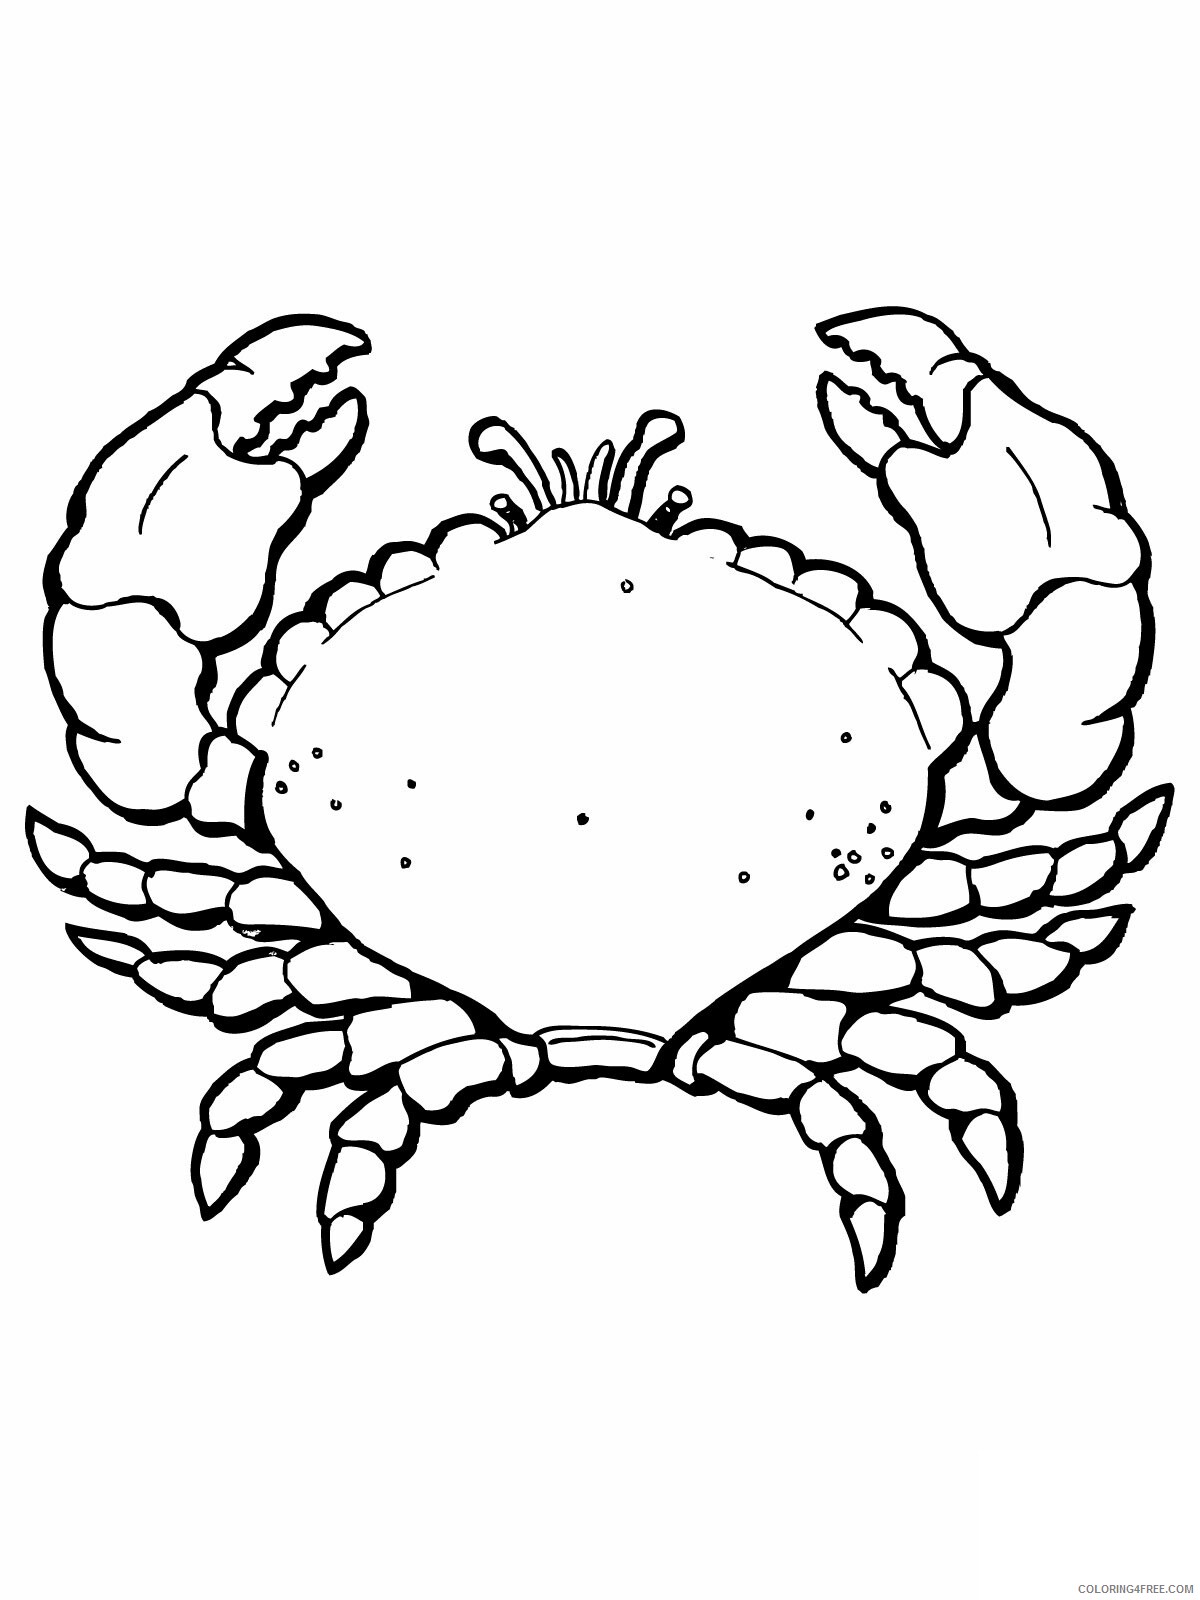 Crab Coloring Pages Animal Printable Sheets Free Crab 2021 1244 Coloring4free